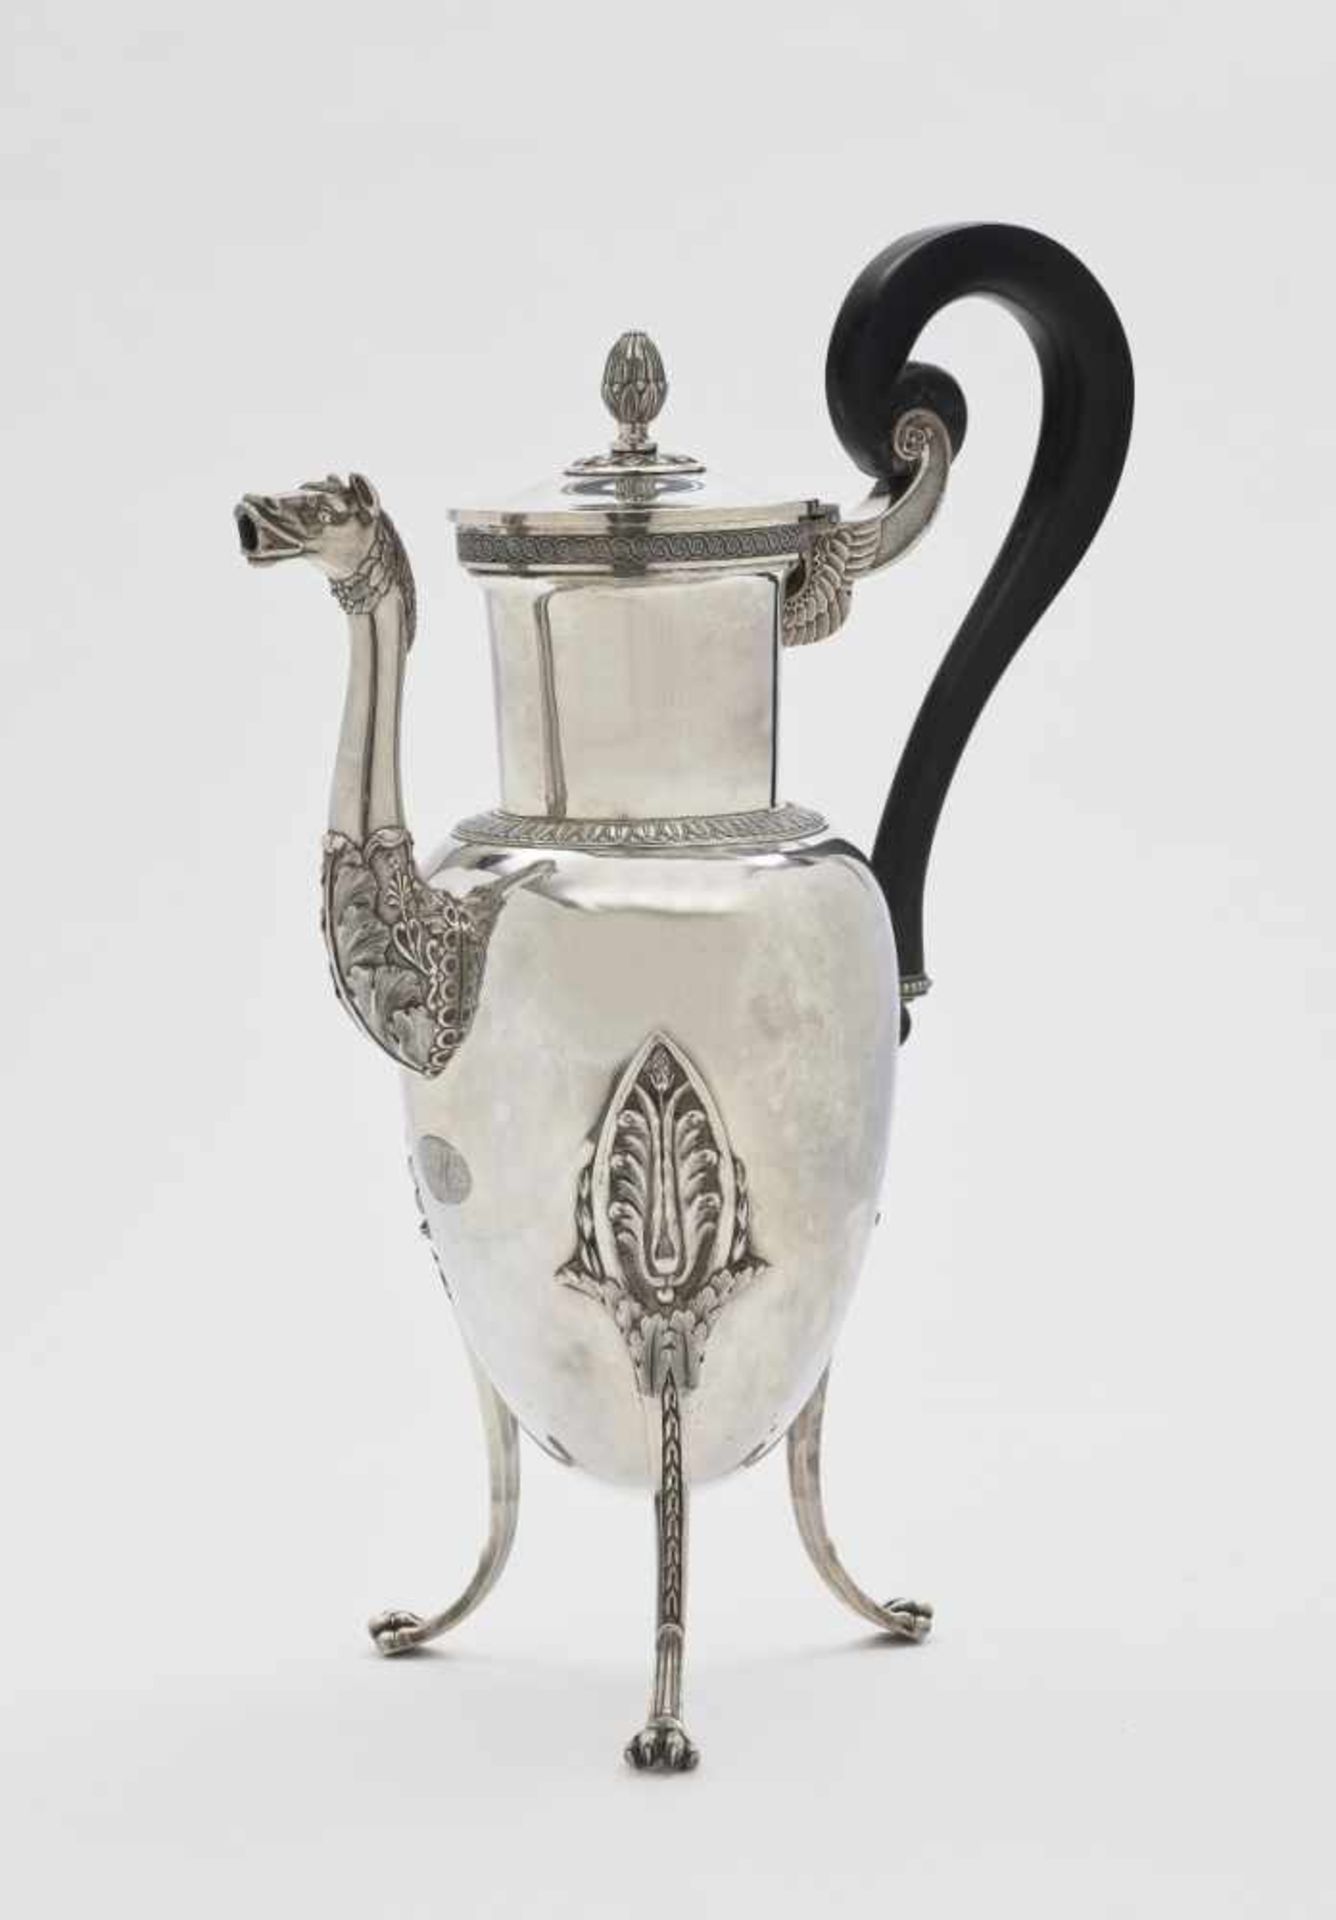 KaffeekanneParis, 1809 - 1819, Léonard Chatenet Silber. Geschwungener Ebenholzgriff. Balusterform